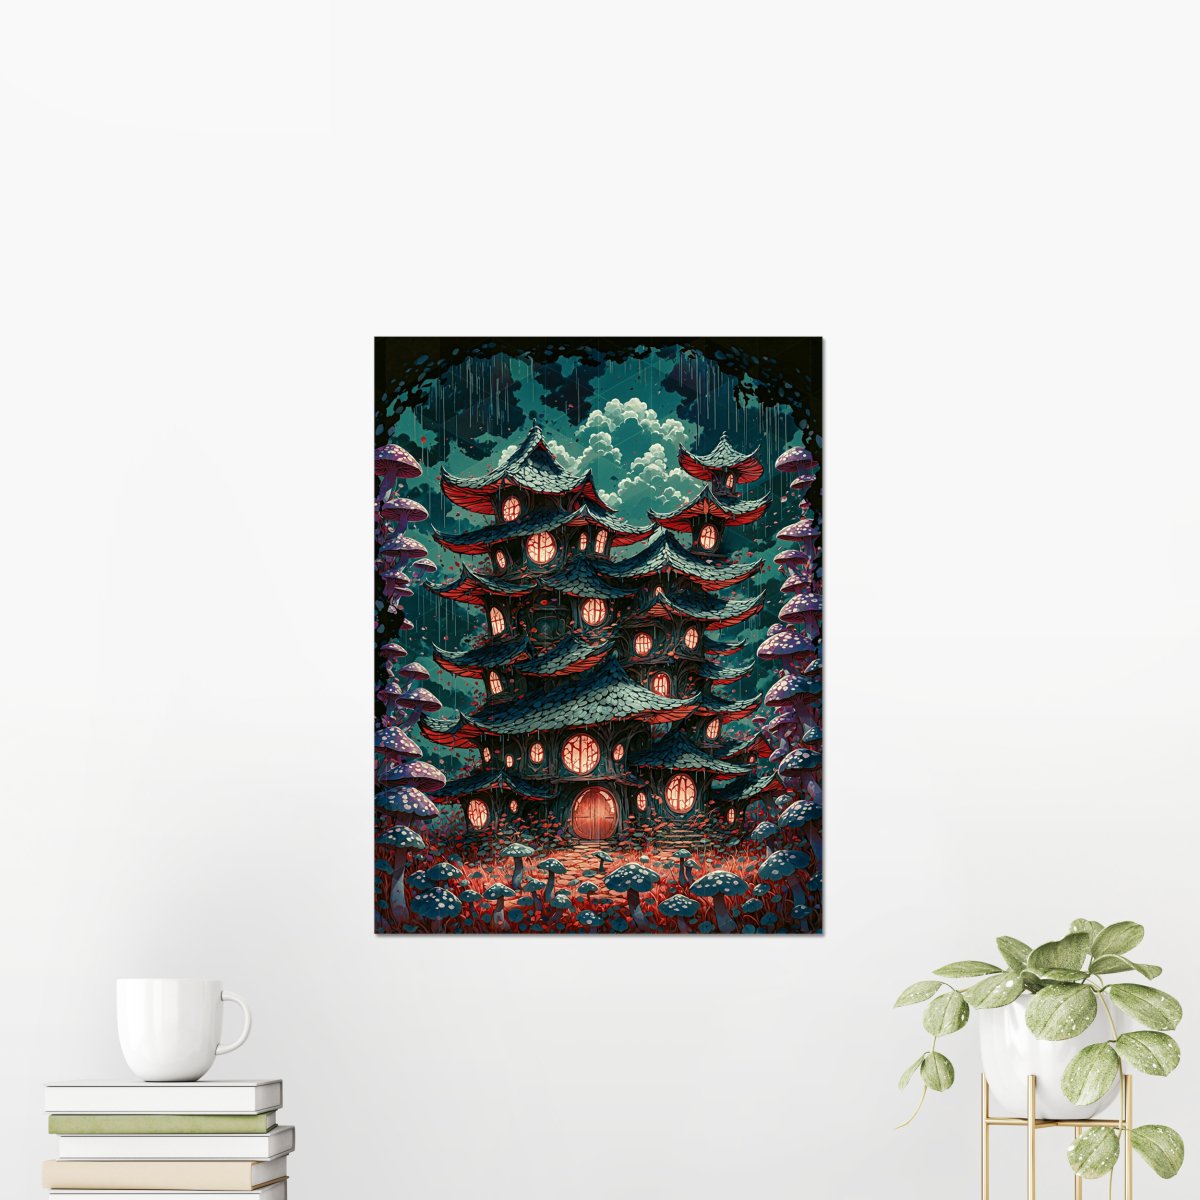 Immundus fungi inn - Art print - Poster - Ever colorful